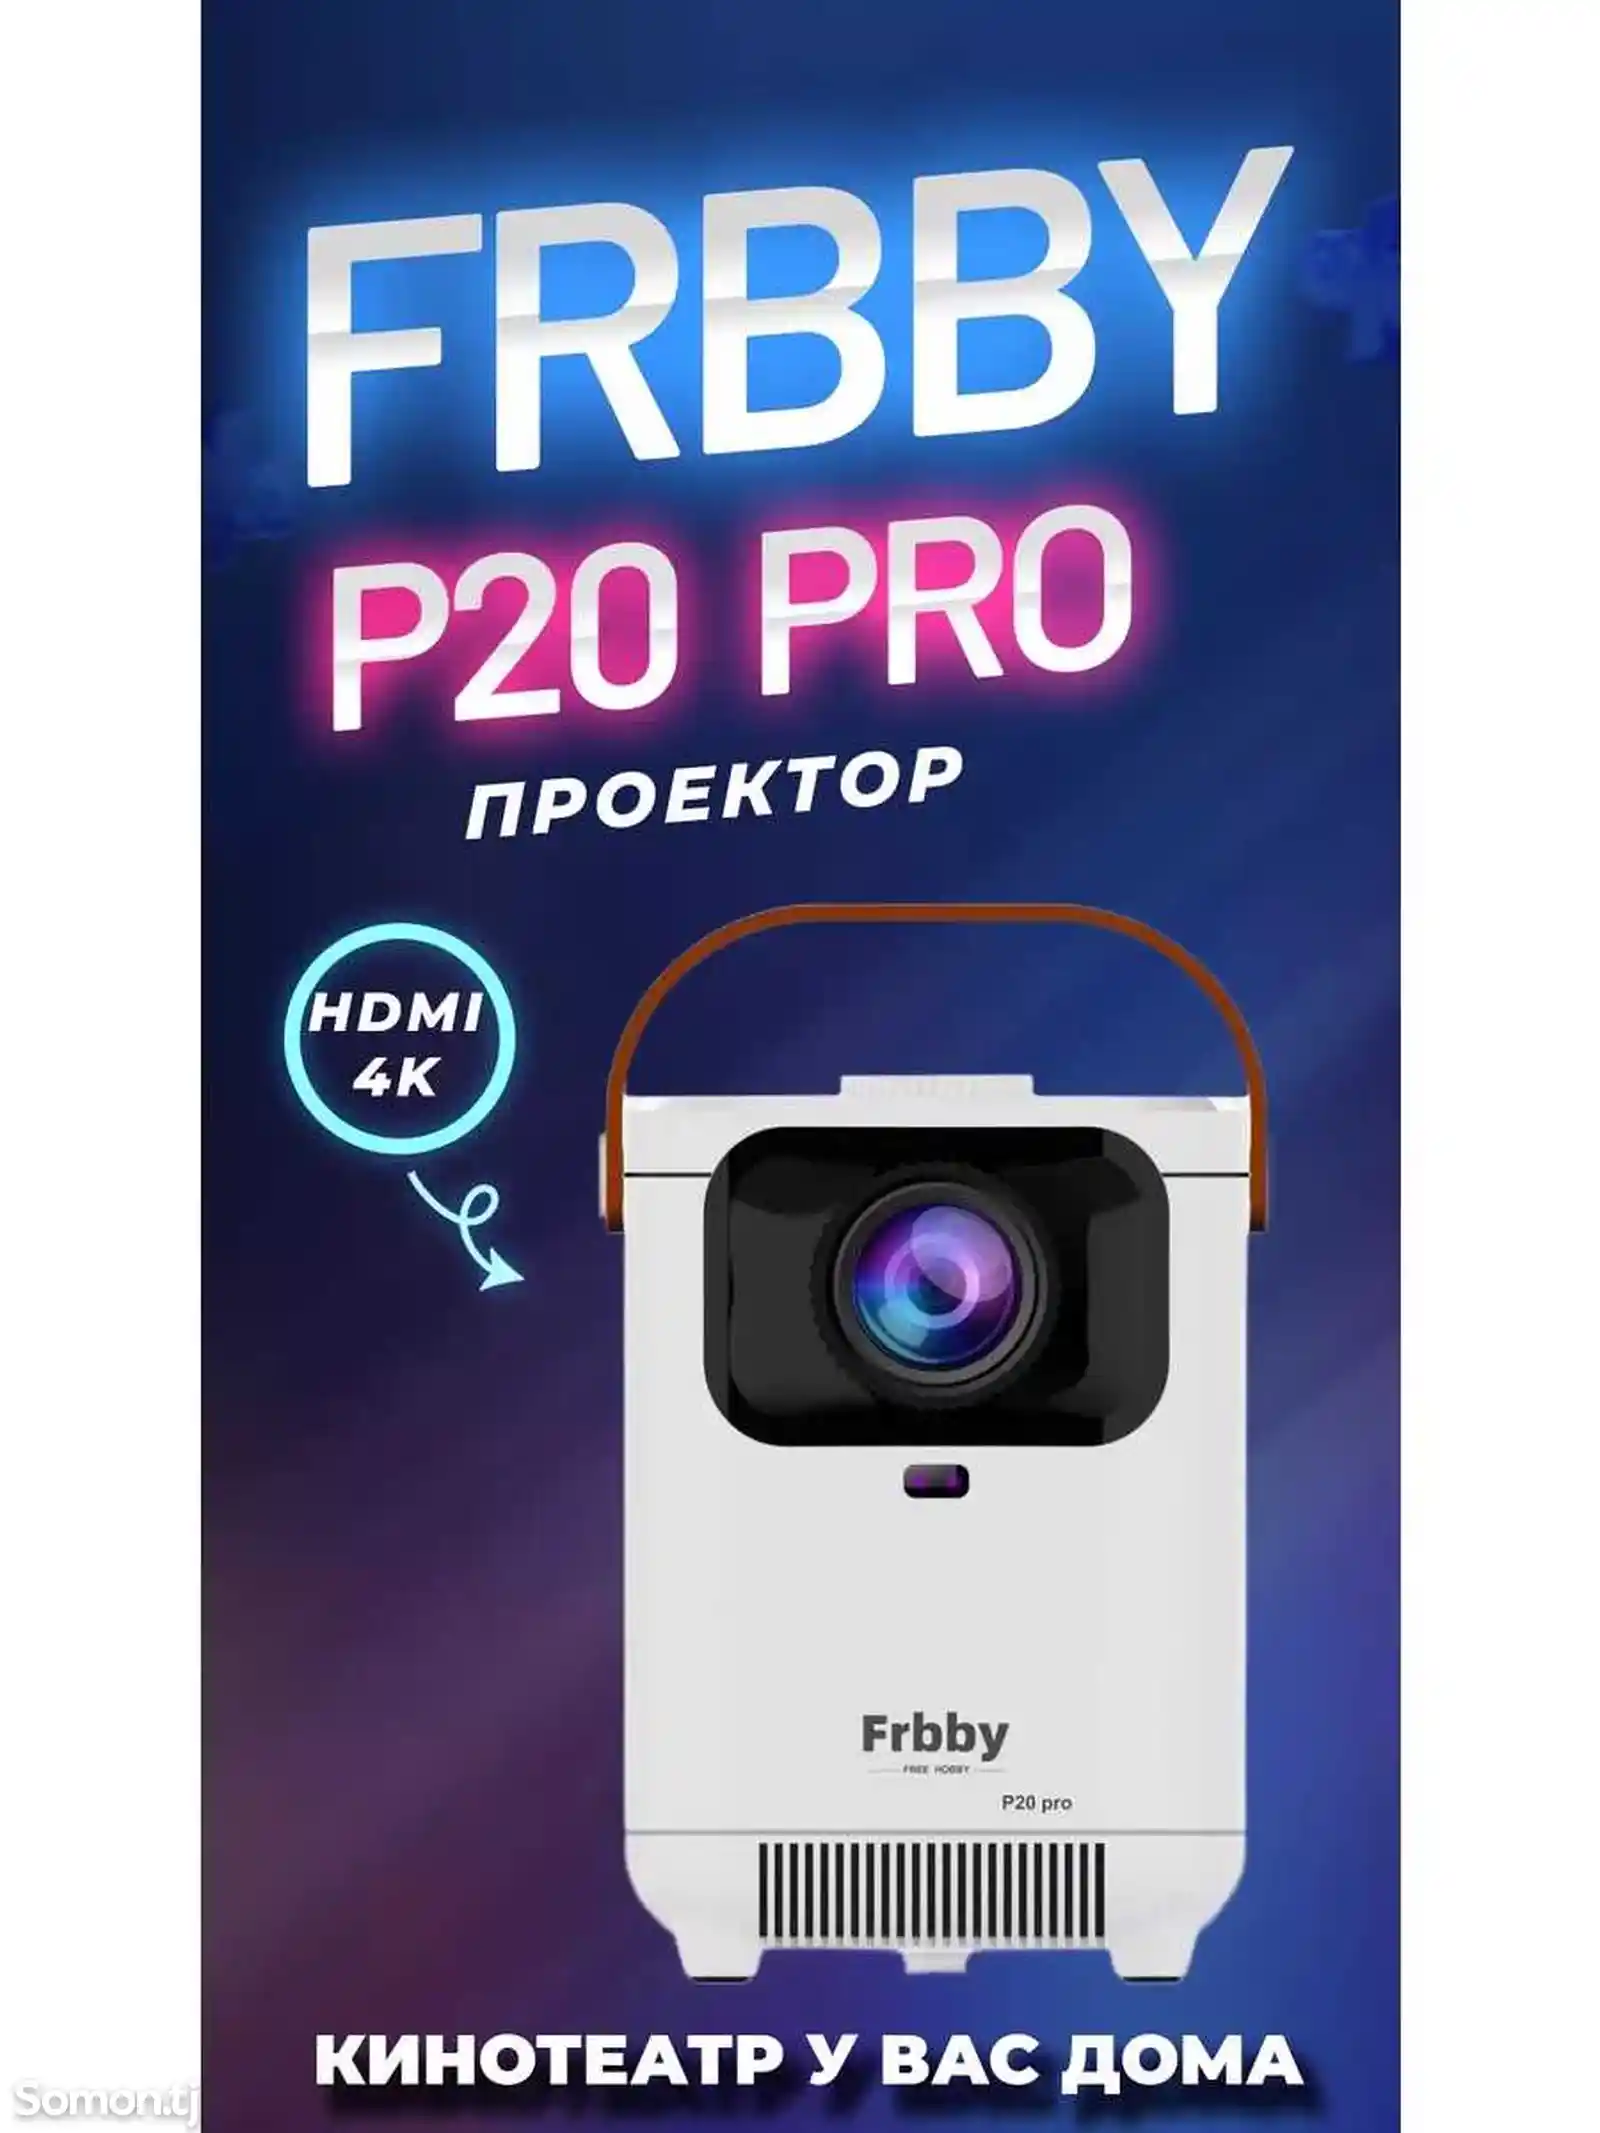 Проектор Frbby P20 Pro-4